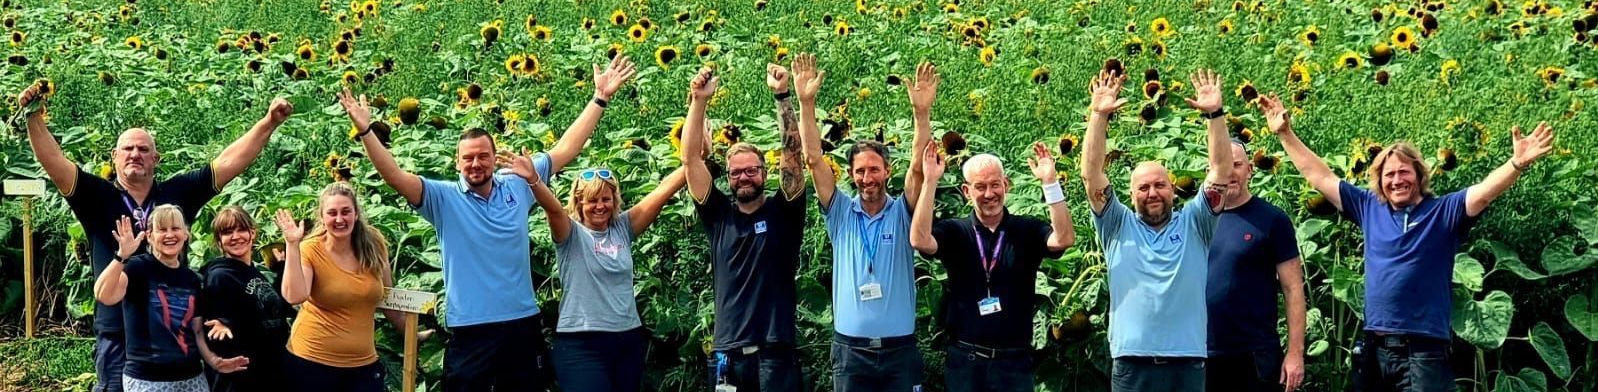 Staff cheering in front of sun flower field